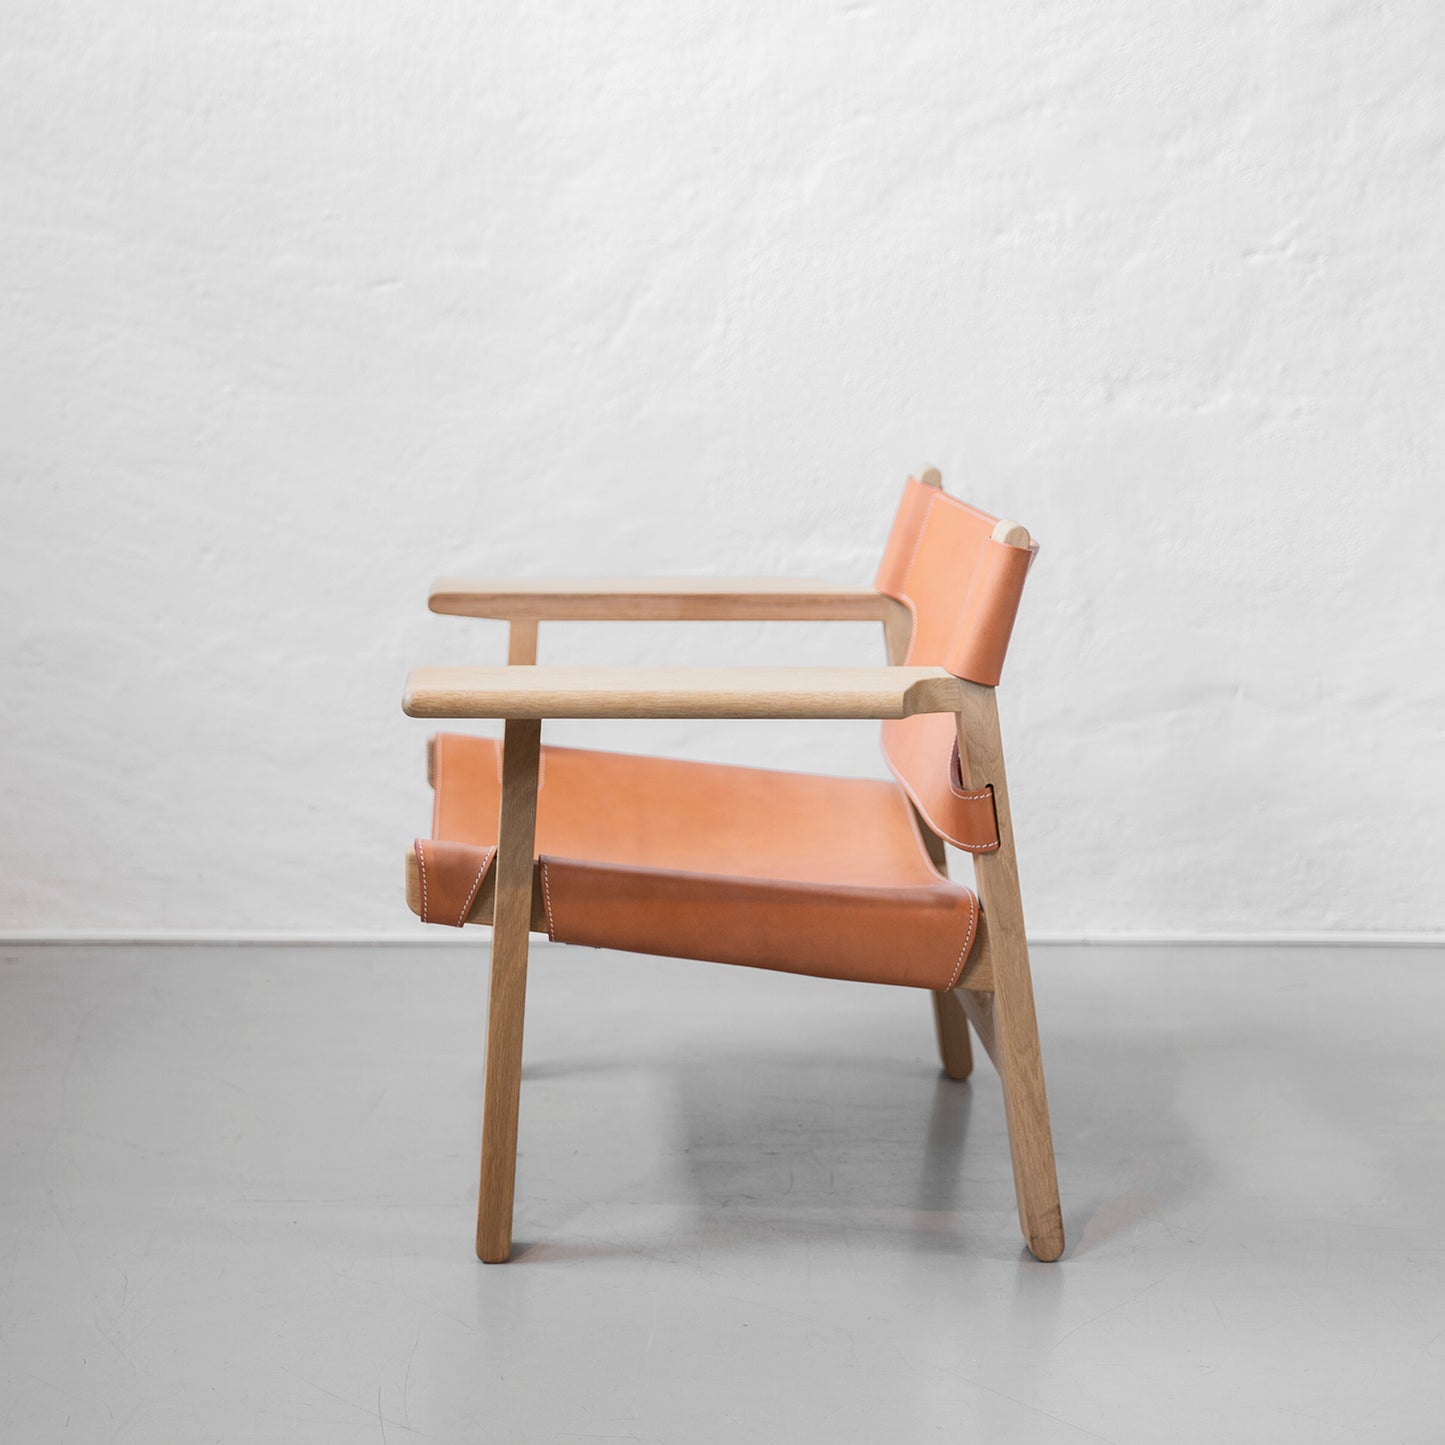 The Spanish Chair - Model 2226